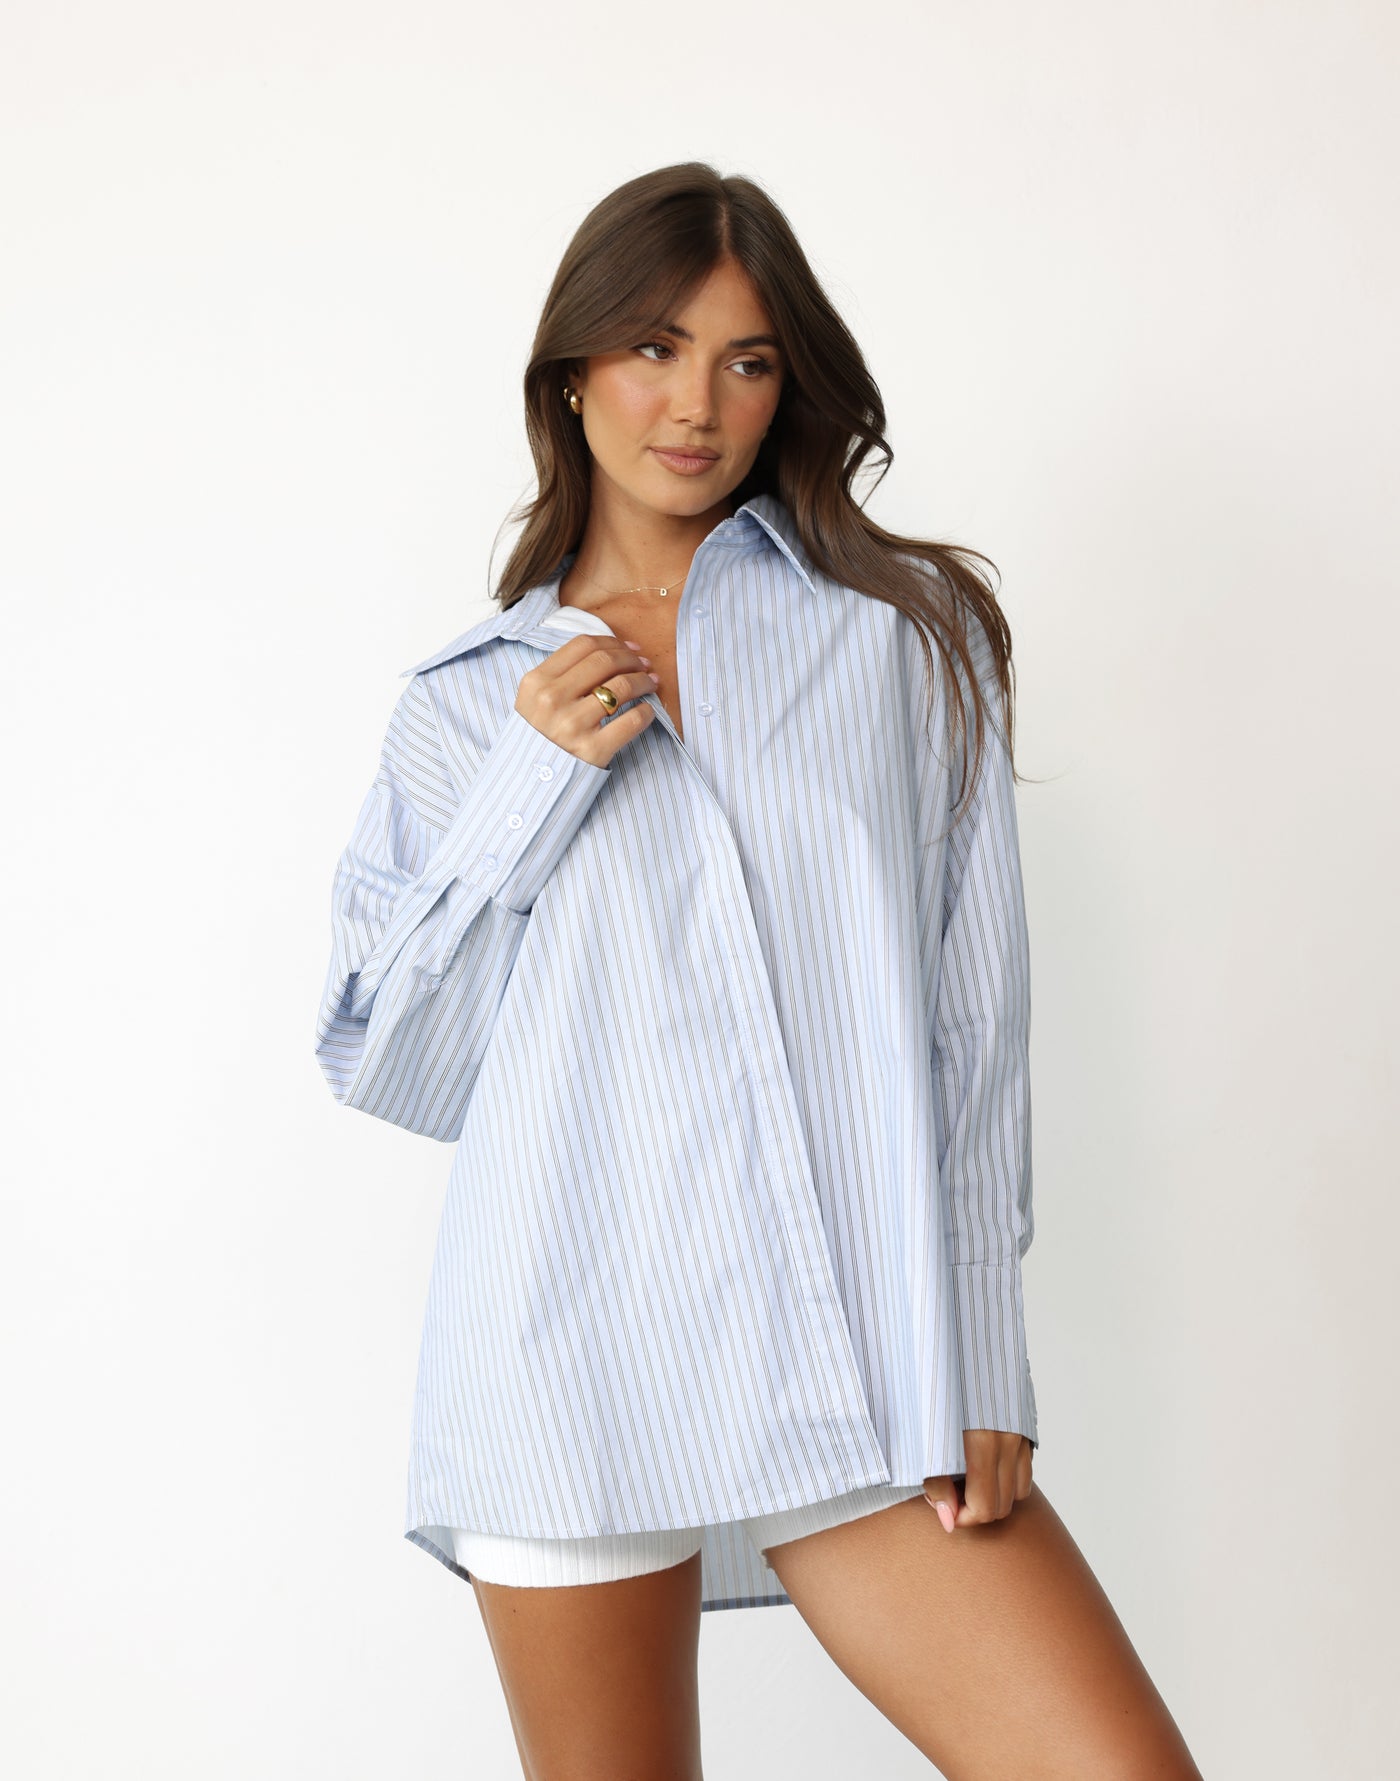 Boyfriend Shirt (Blue Stripe) - By Lioness - - Women's Top - Charcoal Clothing